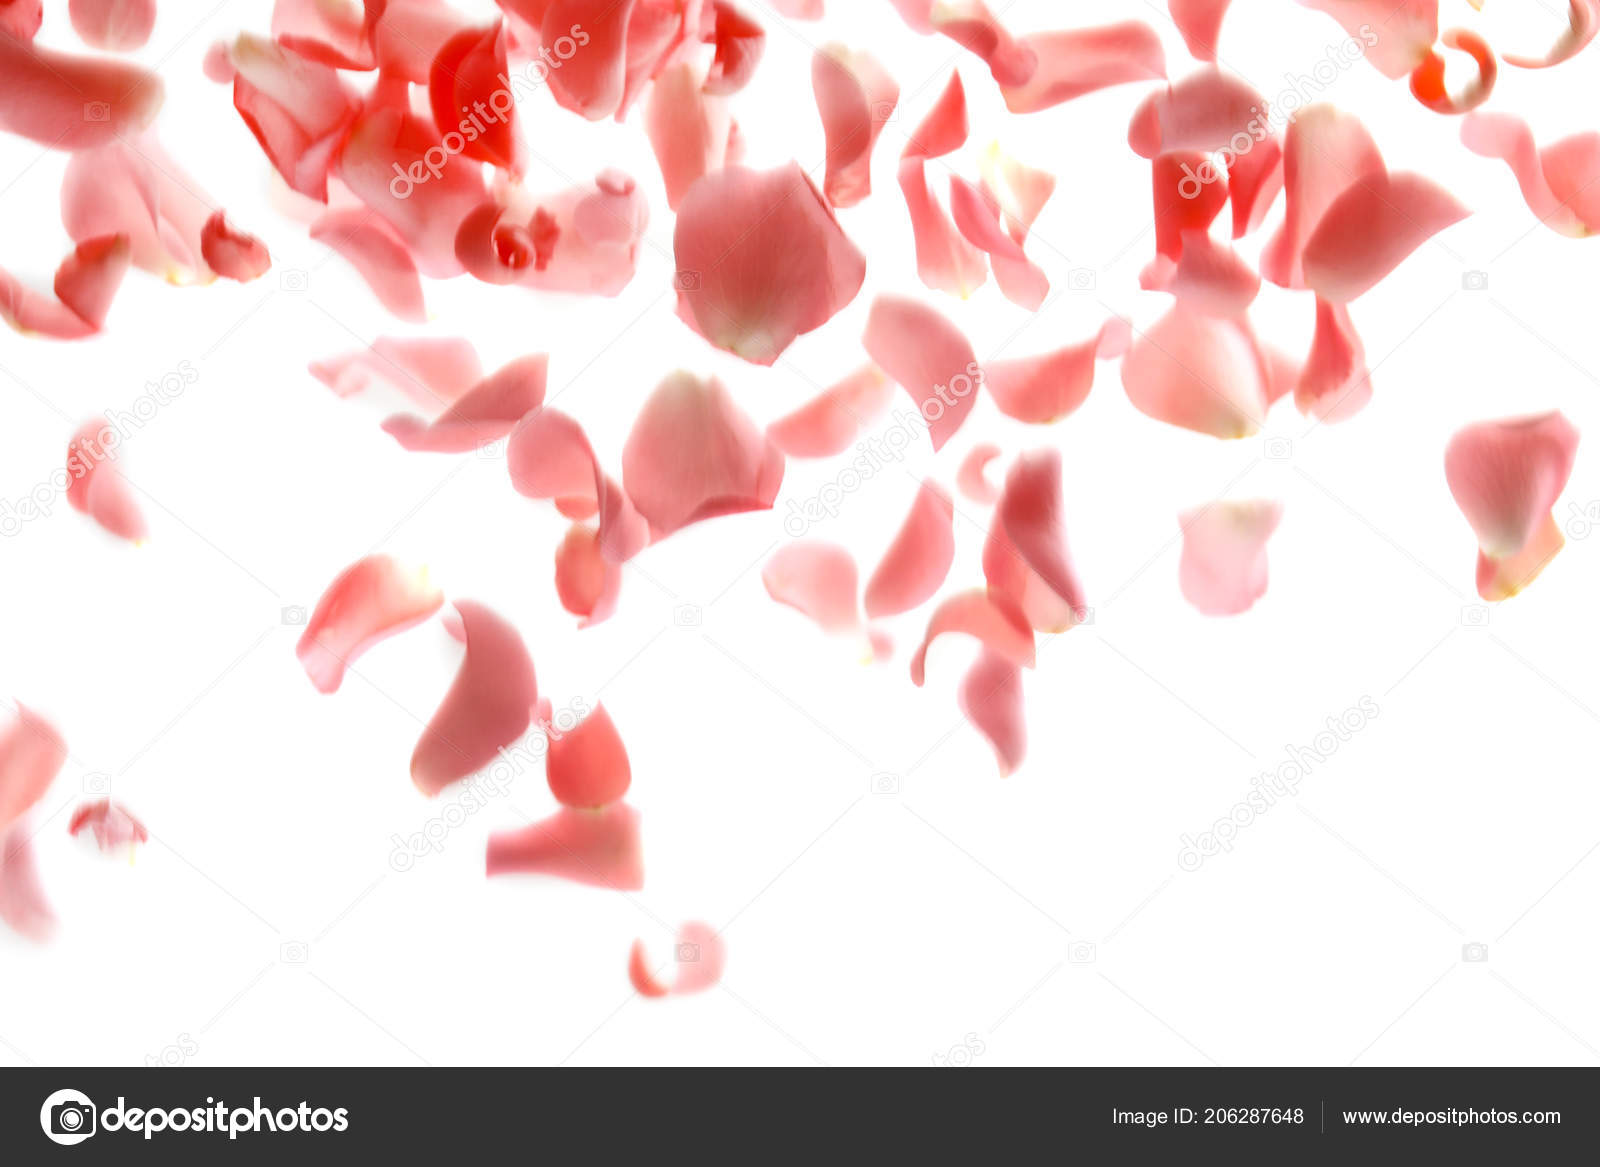 720+ Rose Petals Falling Stock Photos, Pictures & Royalty-Free Images -  iStock  Pink rose petals falling, Red rose petals falling, Rose petals  falling on white